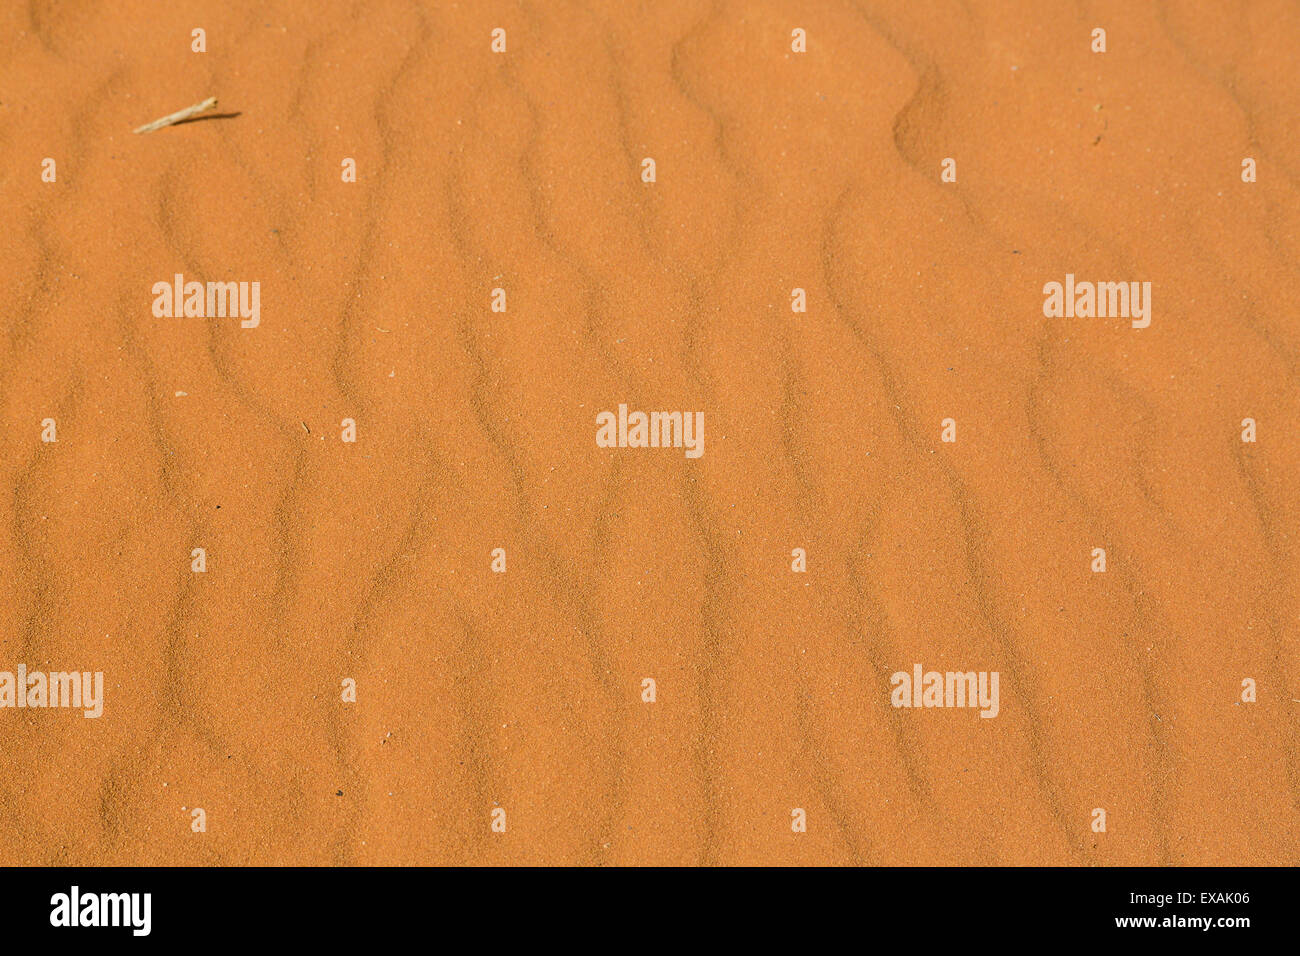 Wadi Rum, Jordan. Abstract detail image of golden sand. Stock Photo